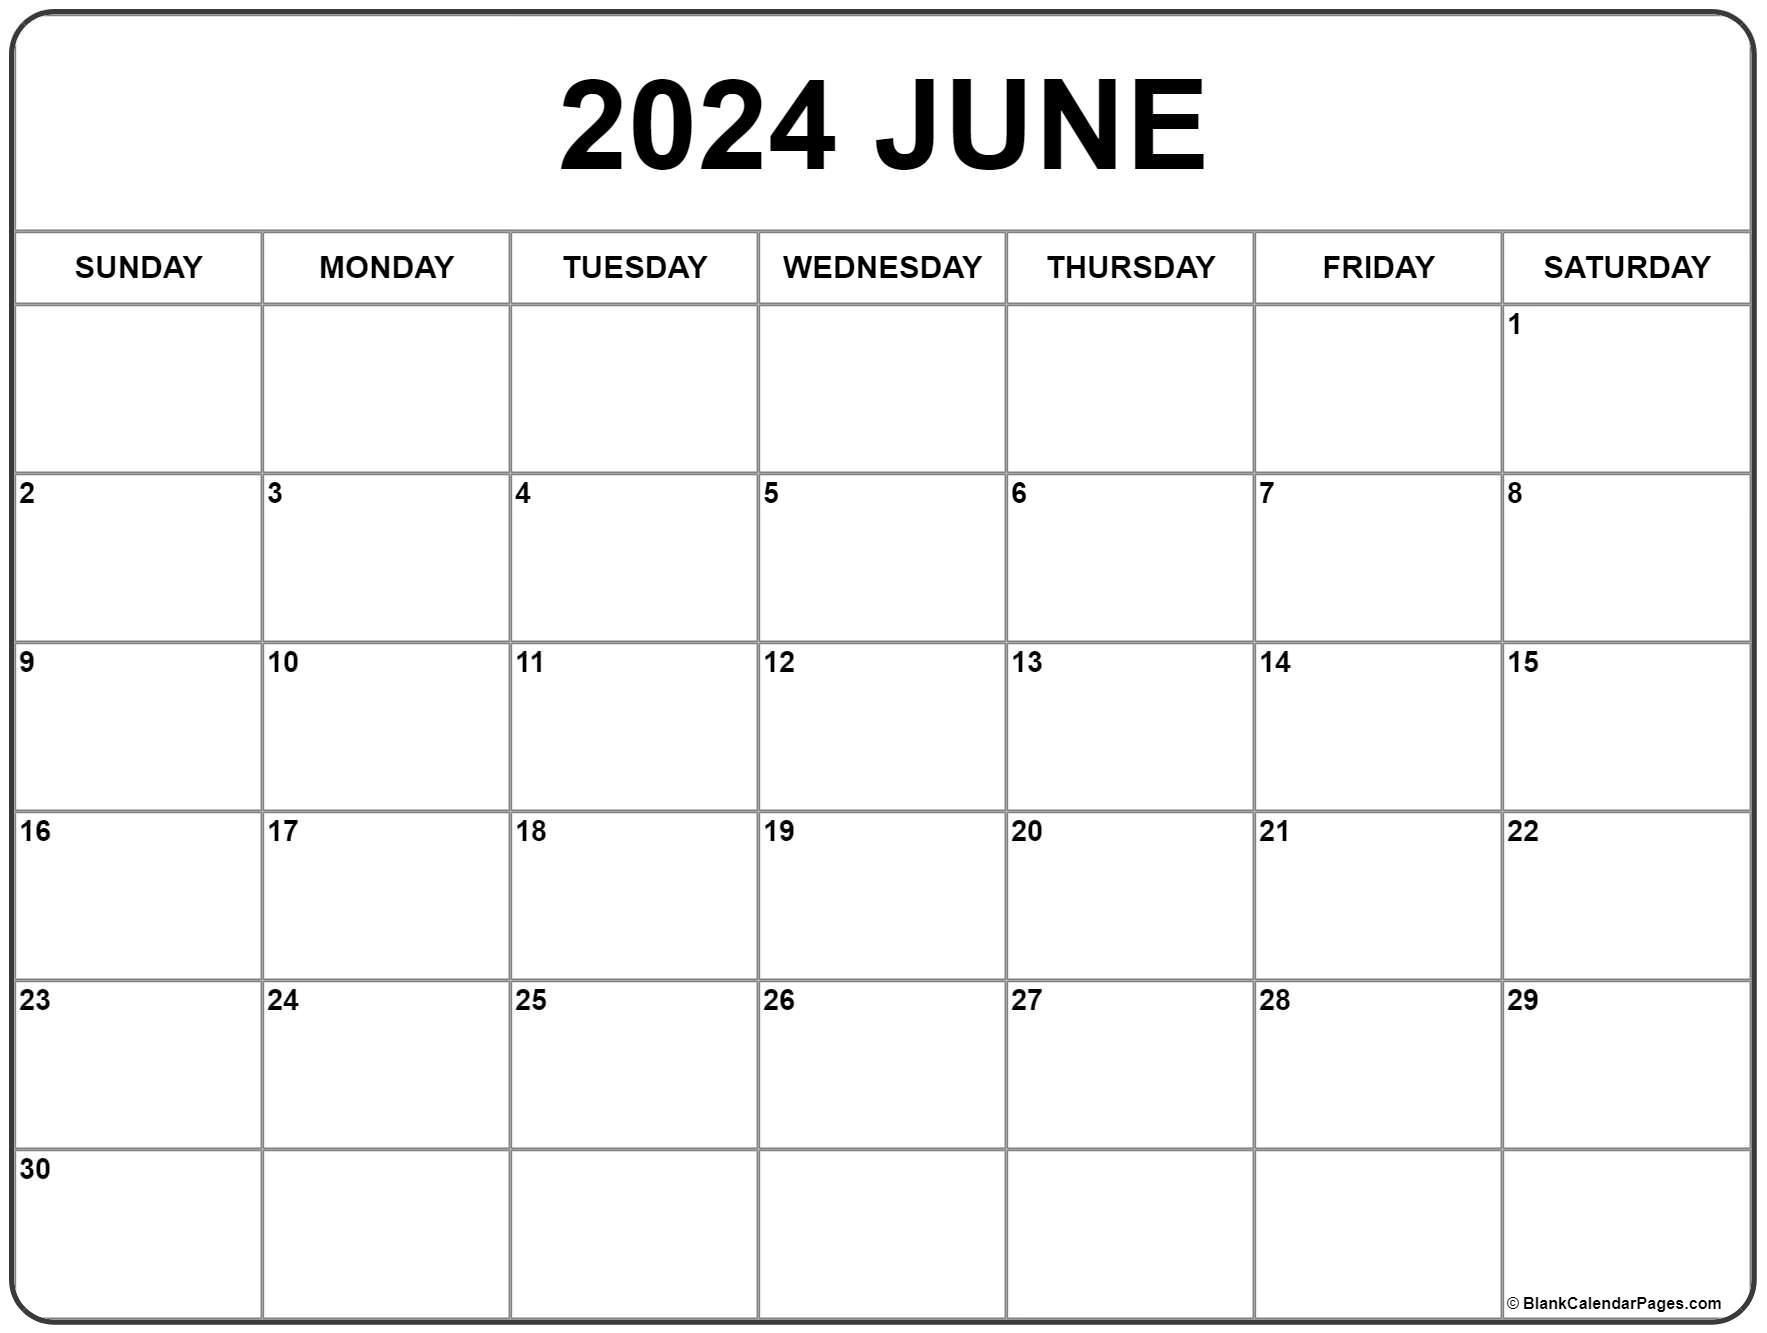 June 2024 Blank Printable Calendar Bevvy Chelsie